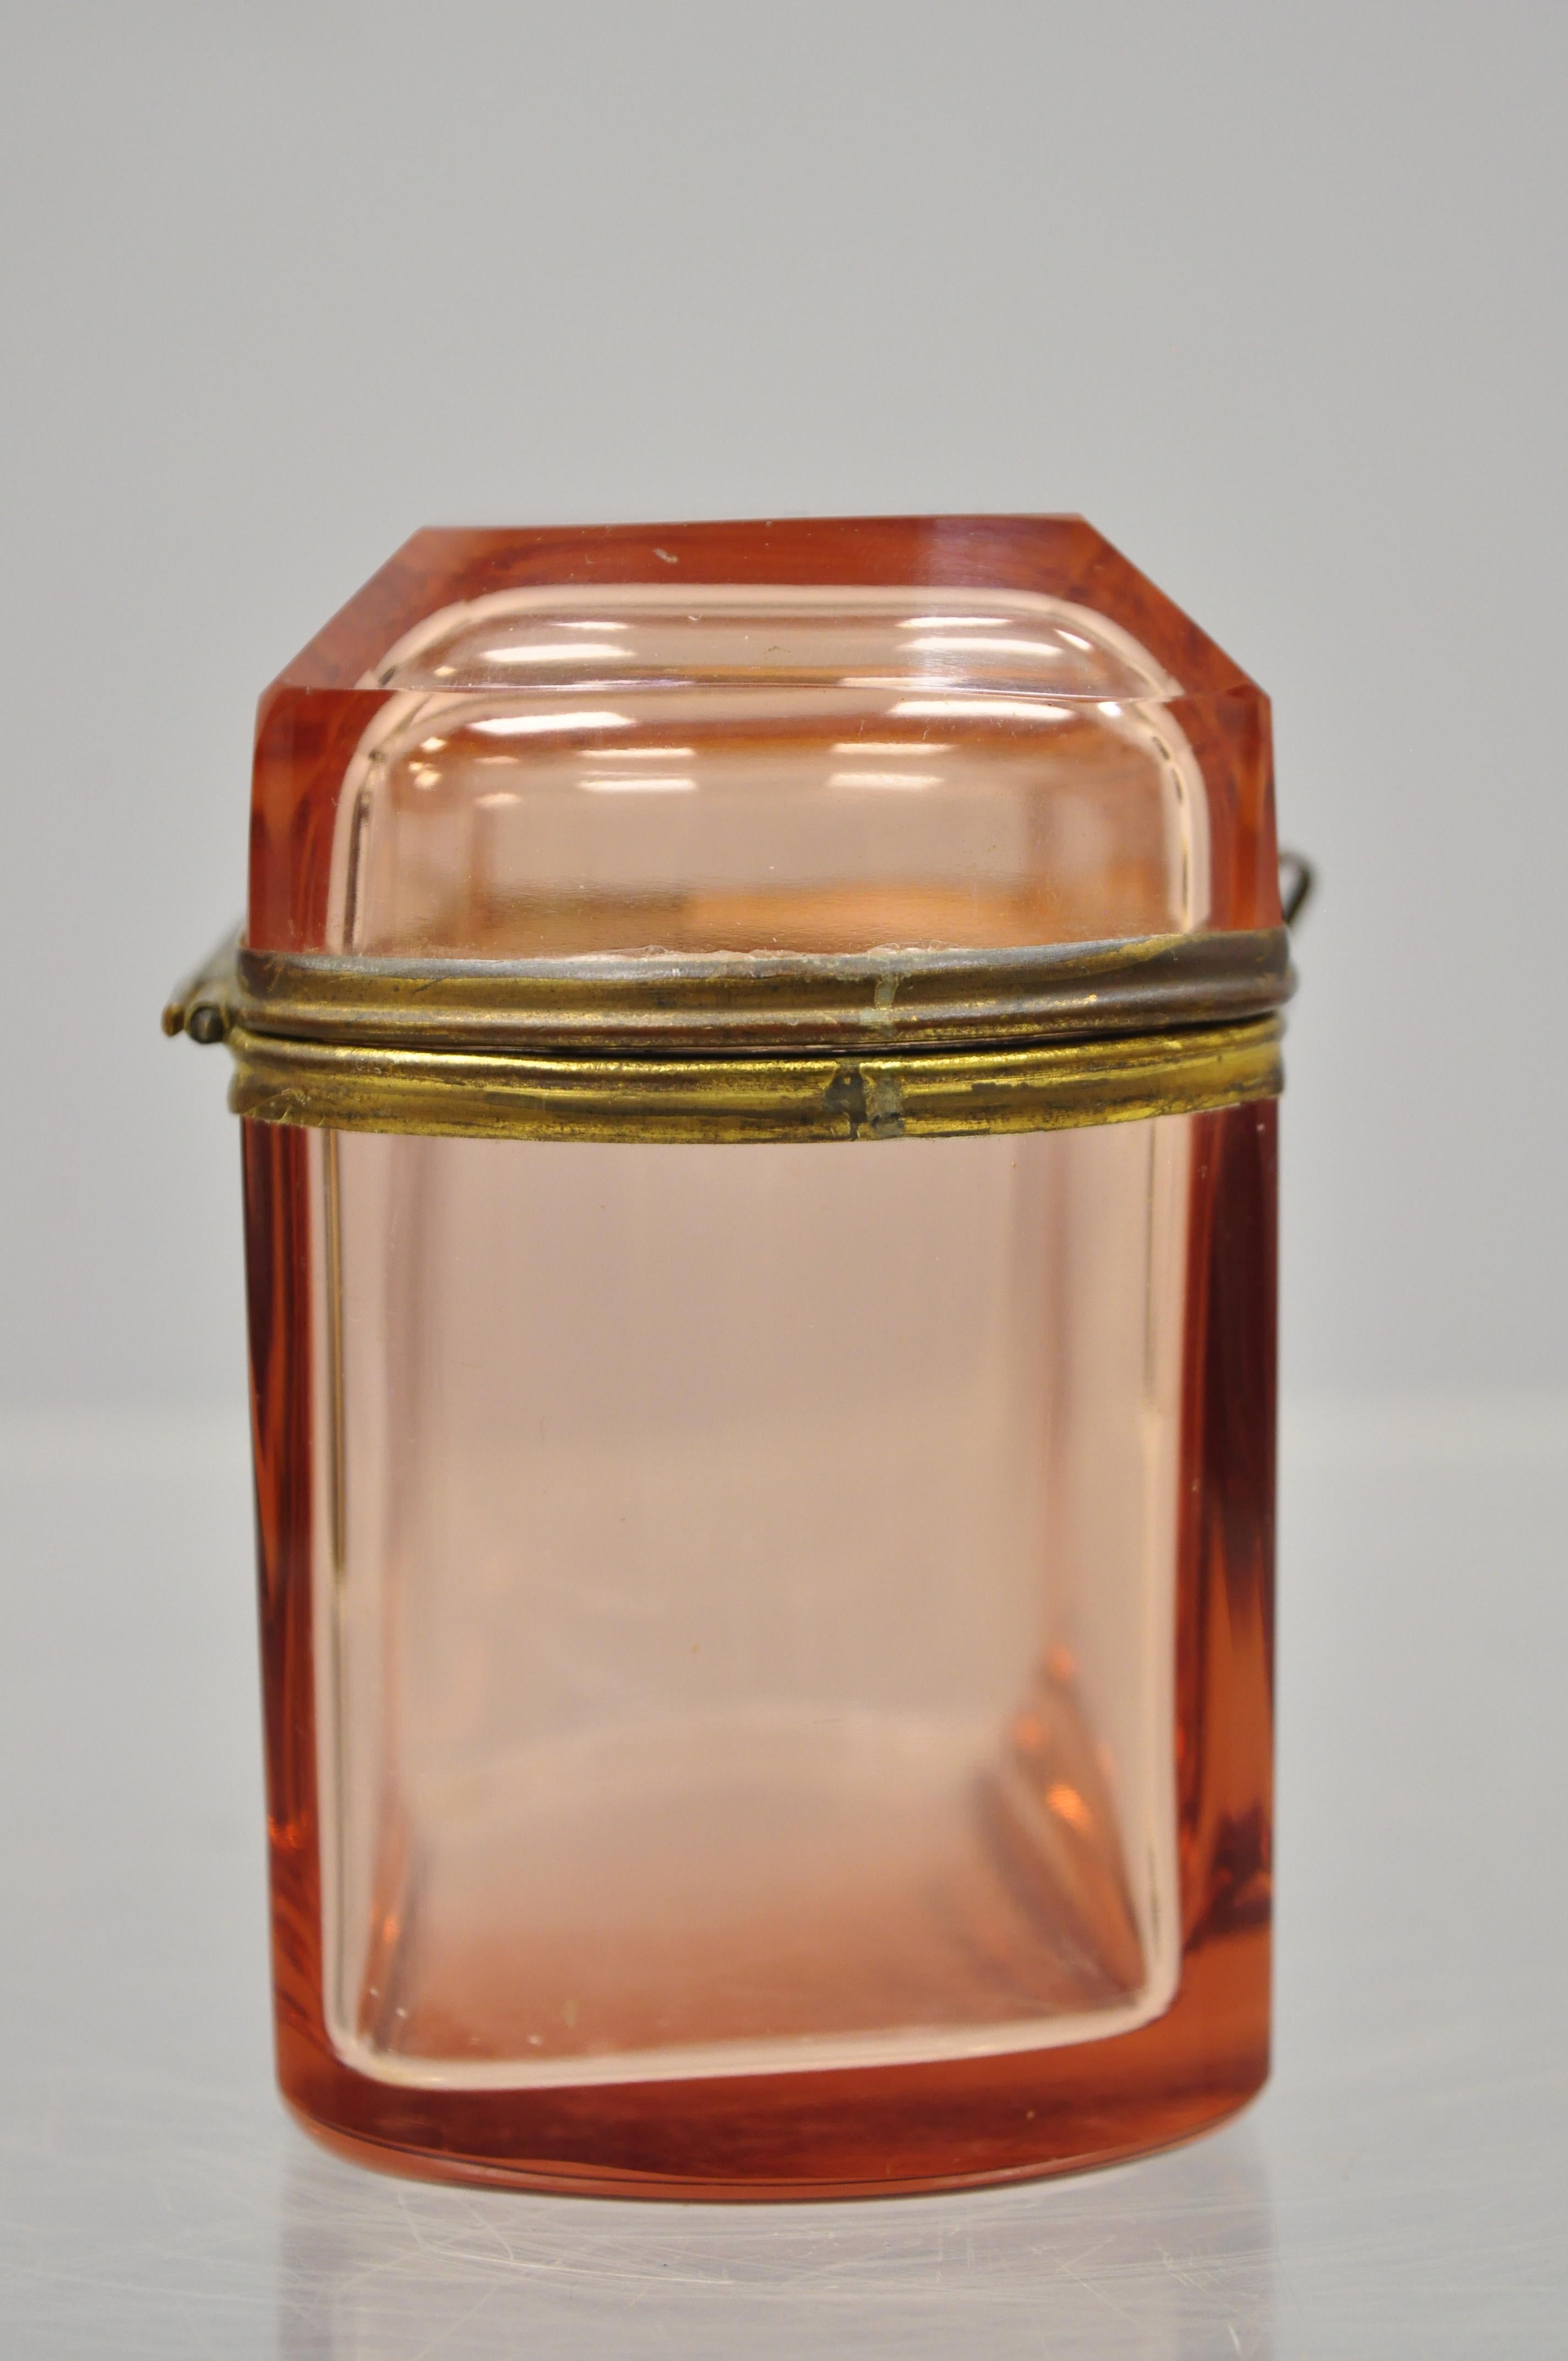 Antique Pink Glass Trinket Jewelry Casket Box Chest Brass Hinge 1